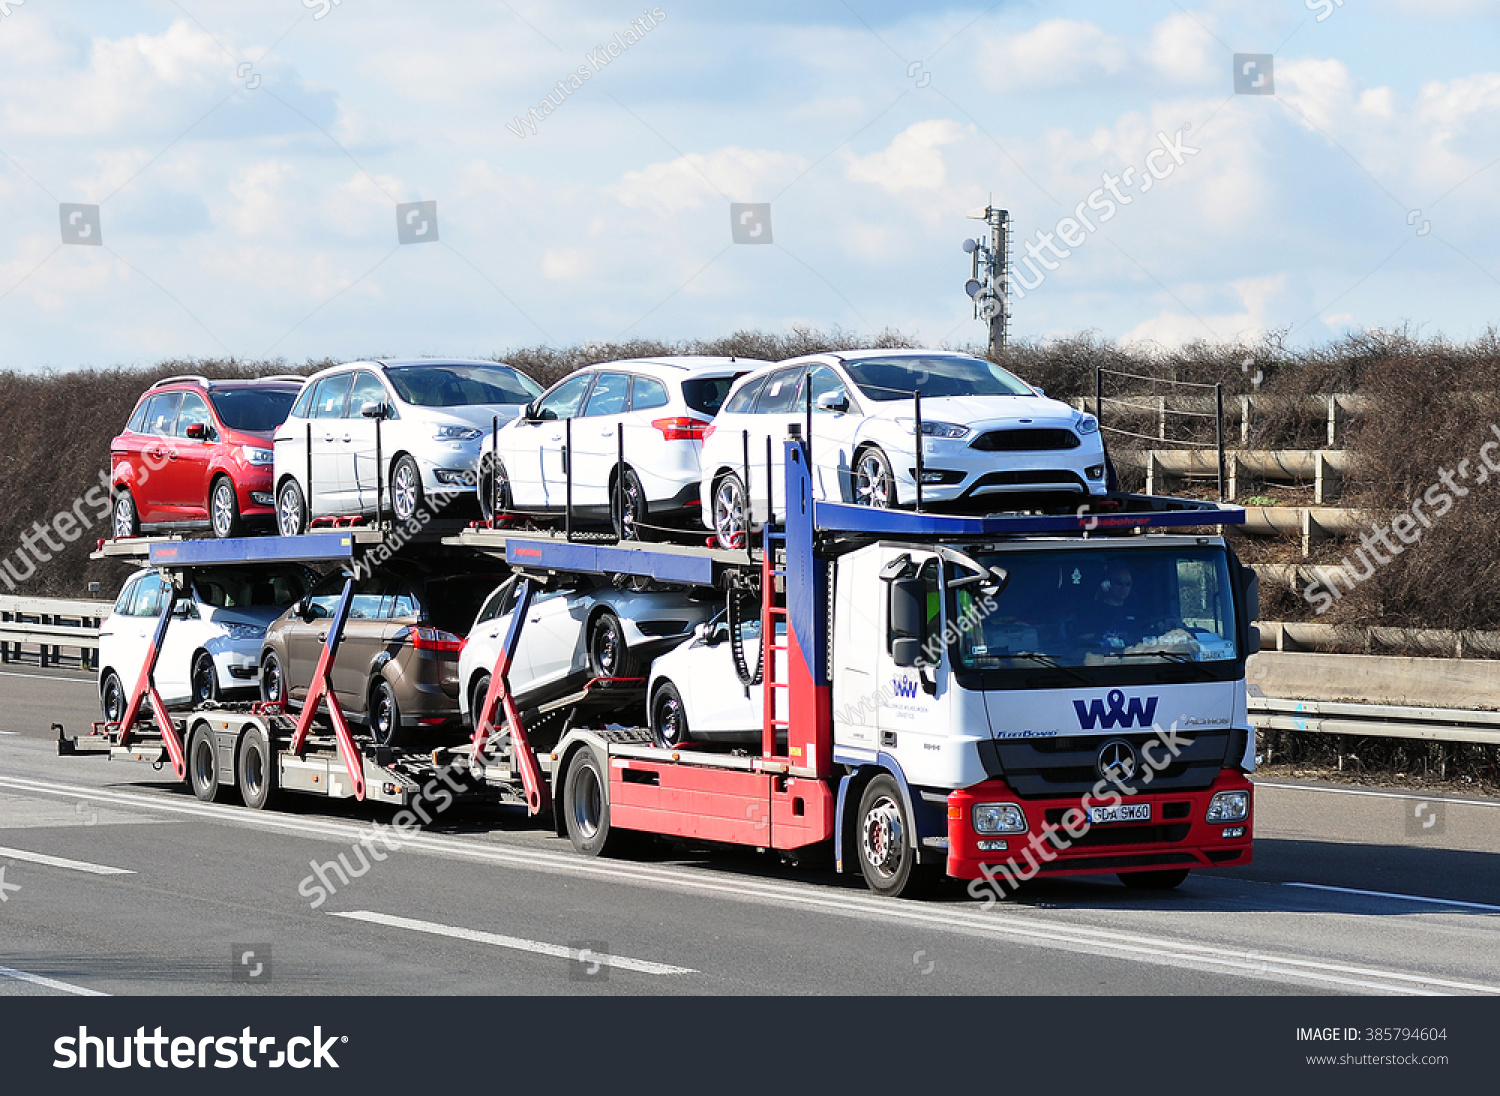 FRANKFURT,GERMANY - FEBR 25:  truck on the highway on February 25,2016 in Frankfurt, Germany. #385794604